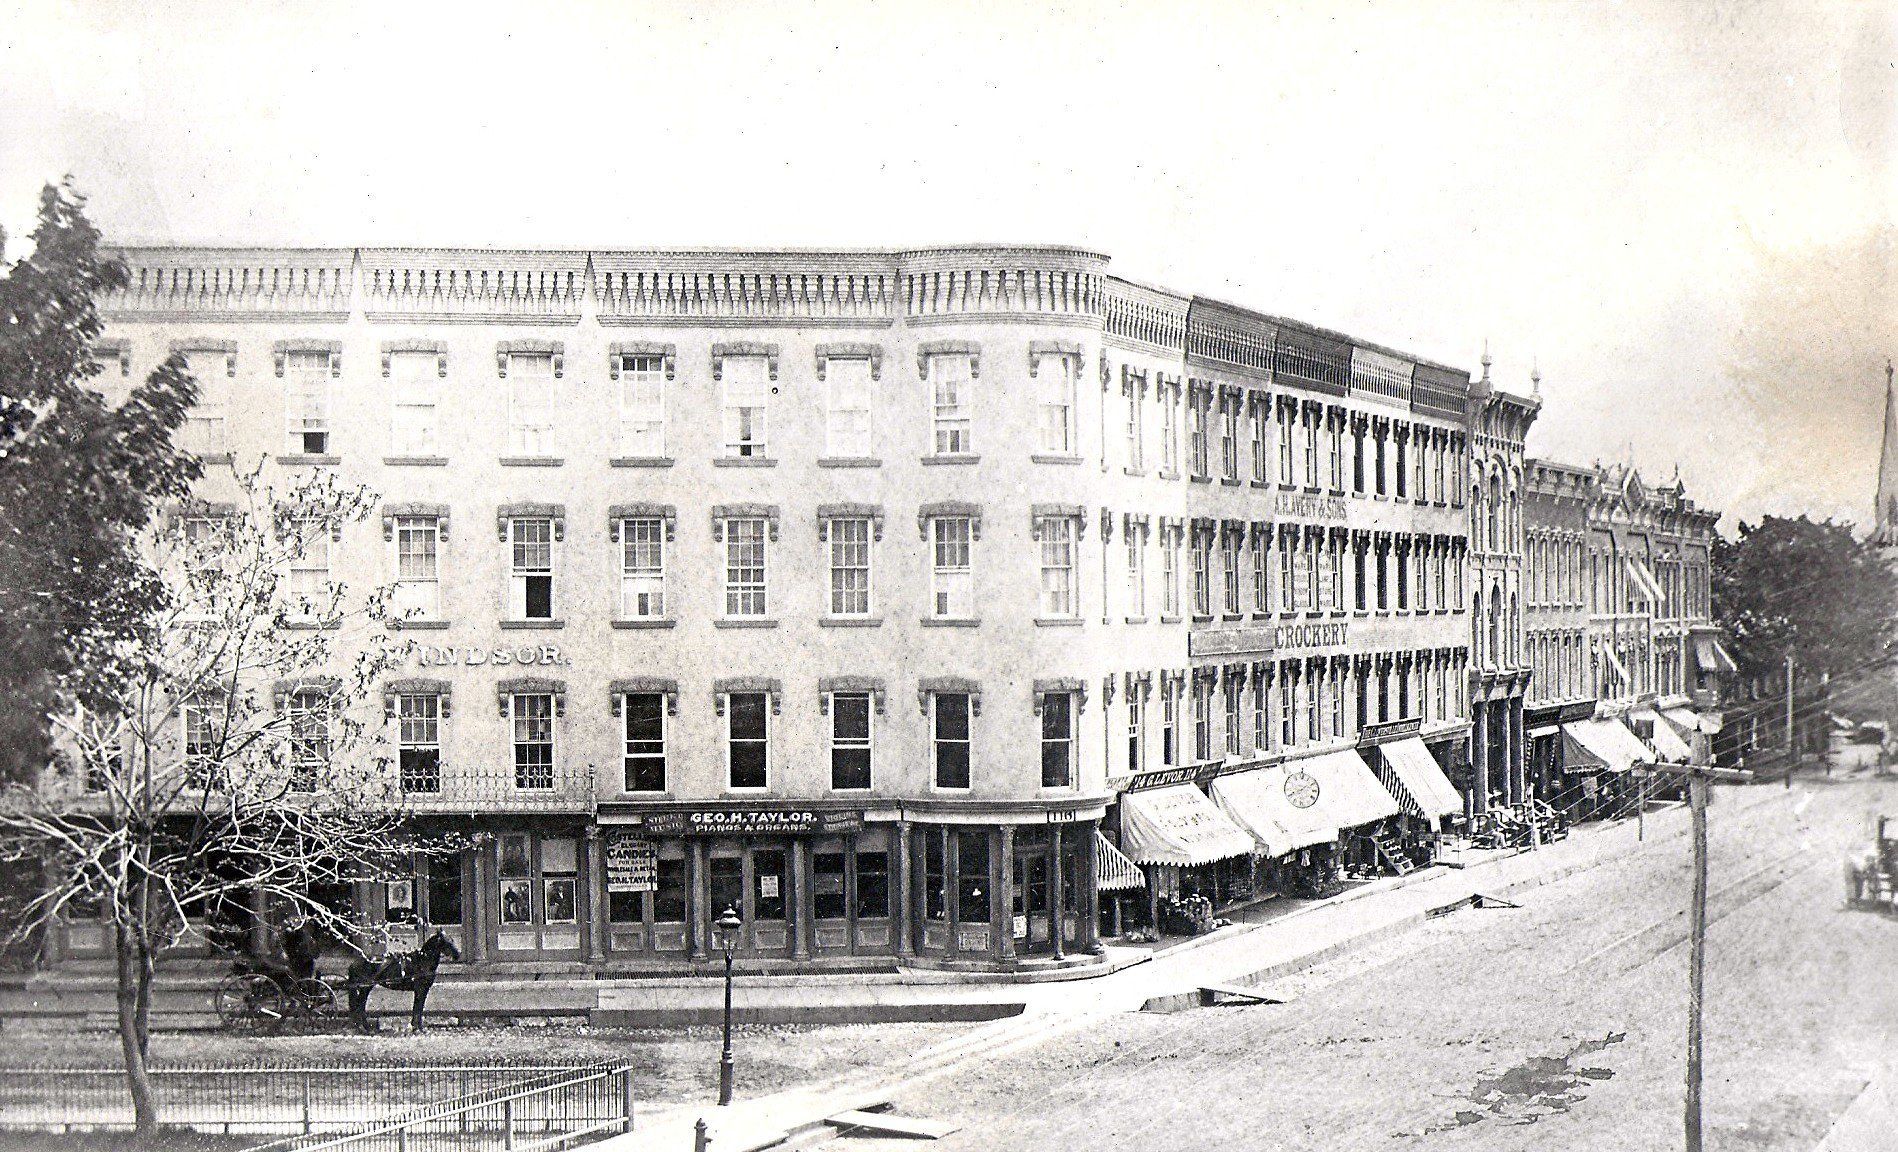 Windsor Hotel c. 1857